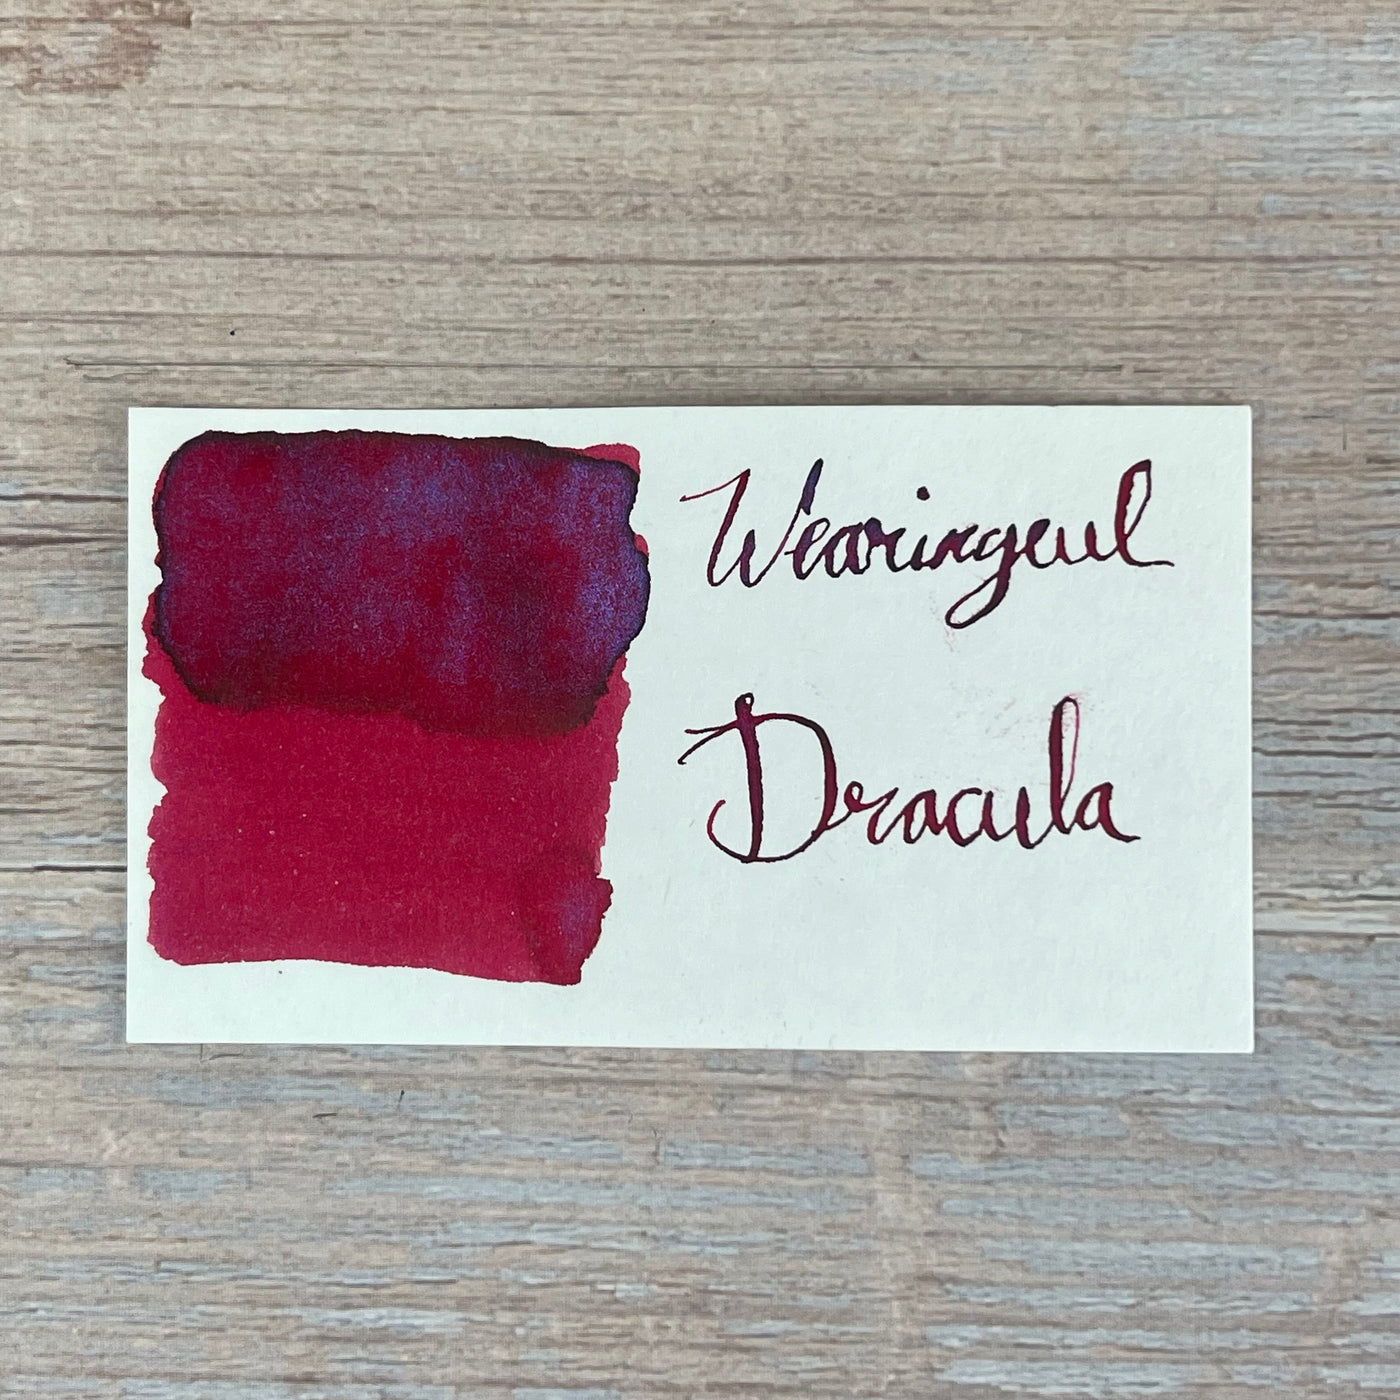 Wearingeul Dracula - 30ml Bottled Ink